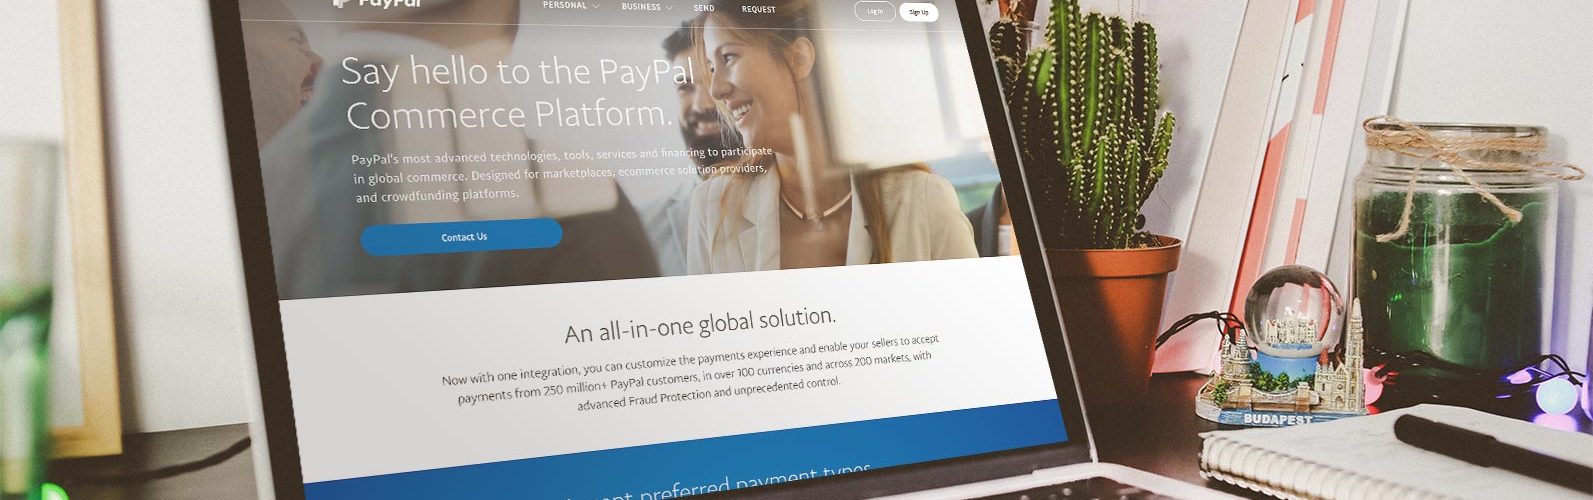 O que é a PayPal Commerce Platform?